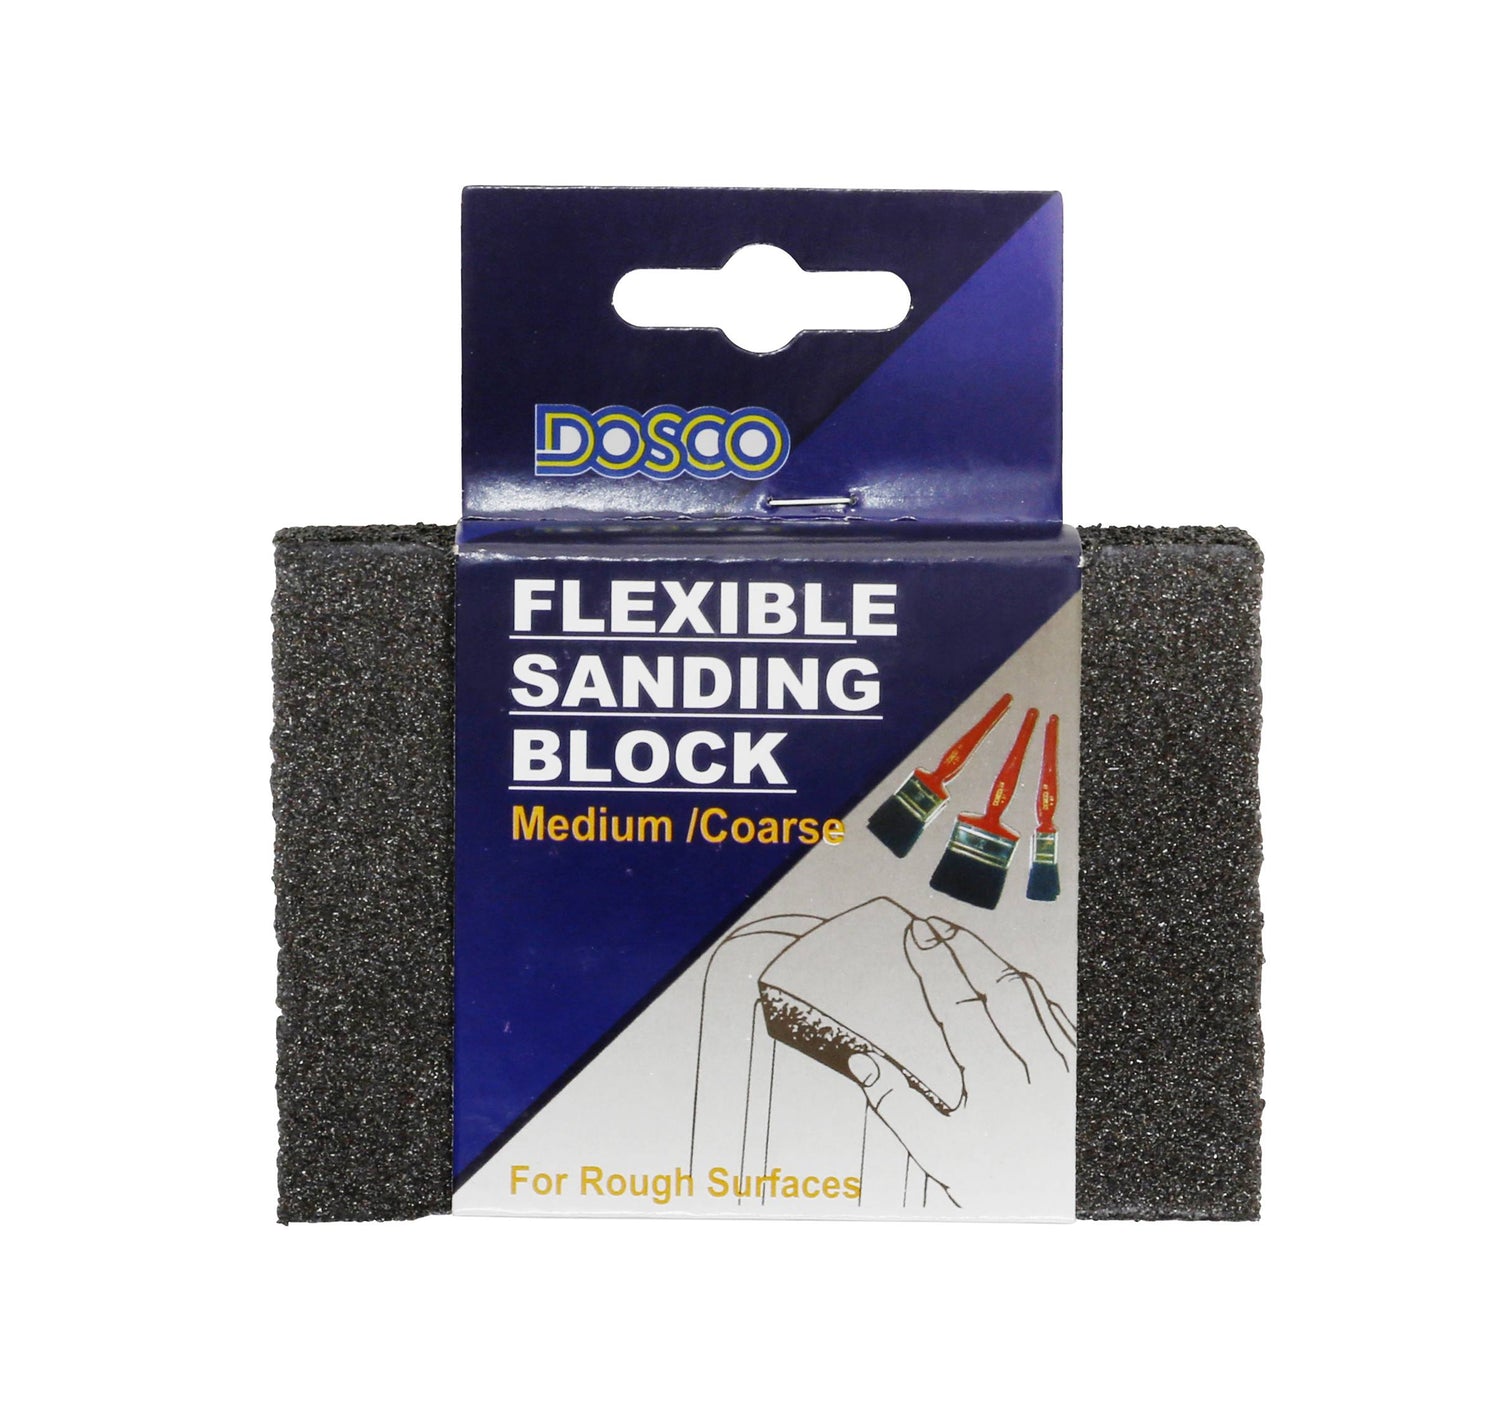 Dosco Flexible Sanding Block Medium / Coarse